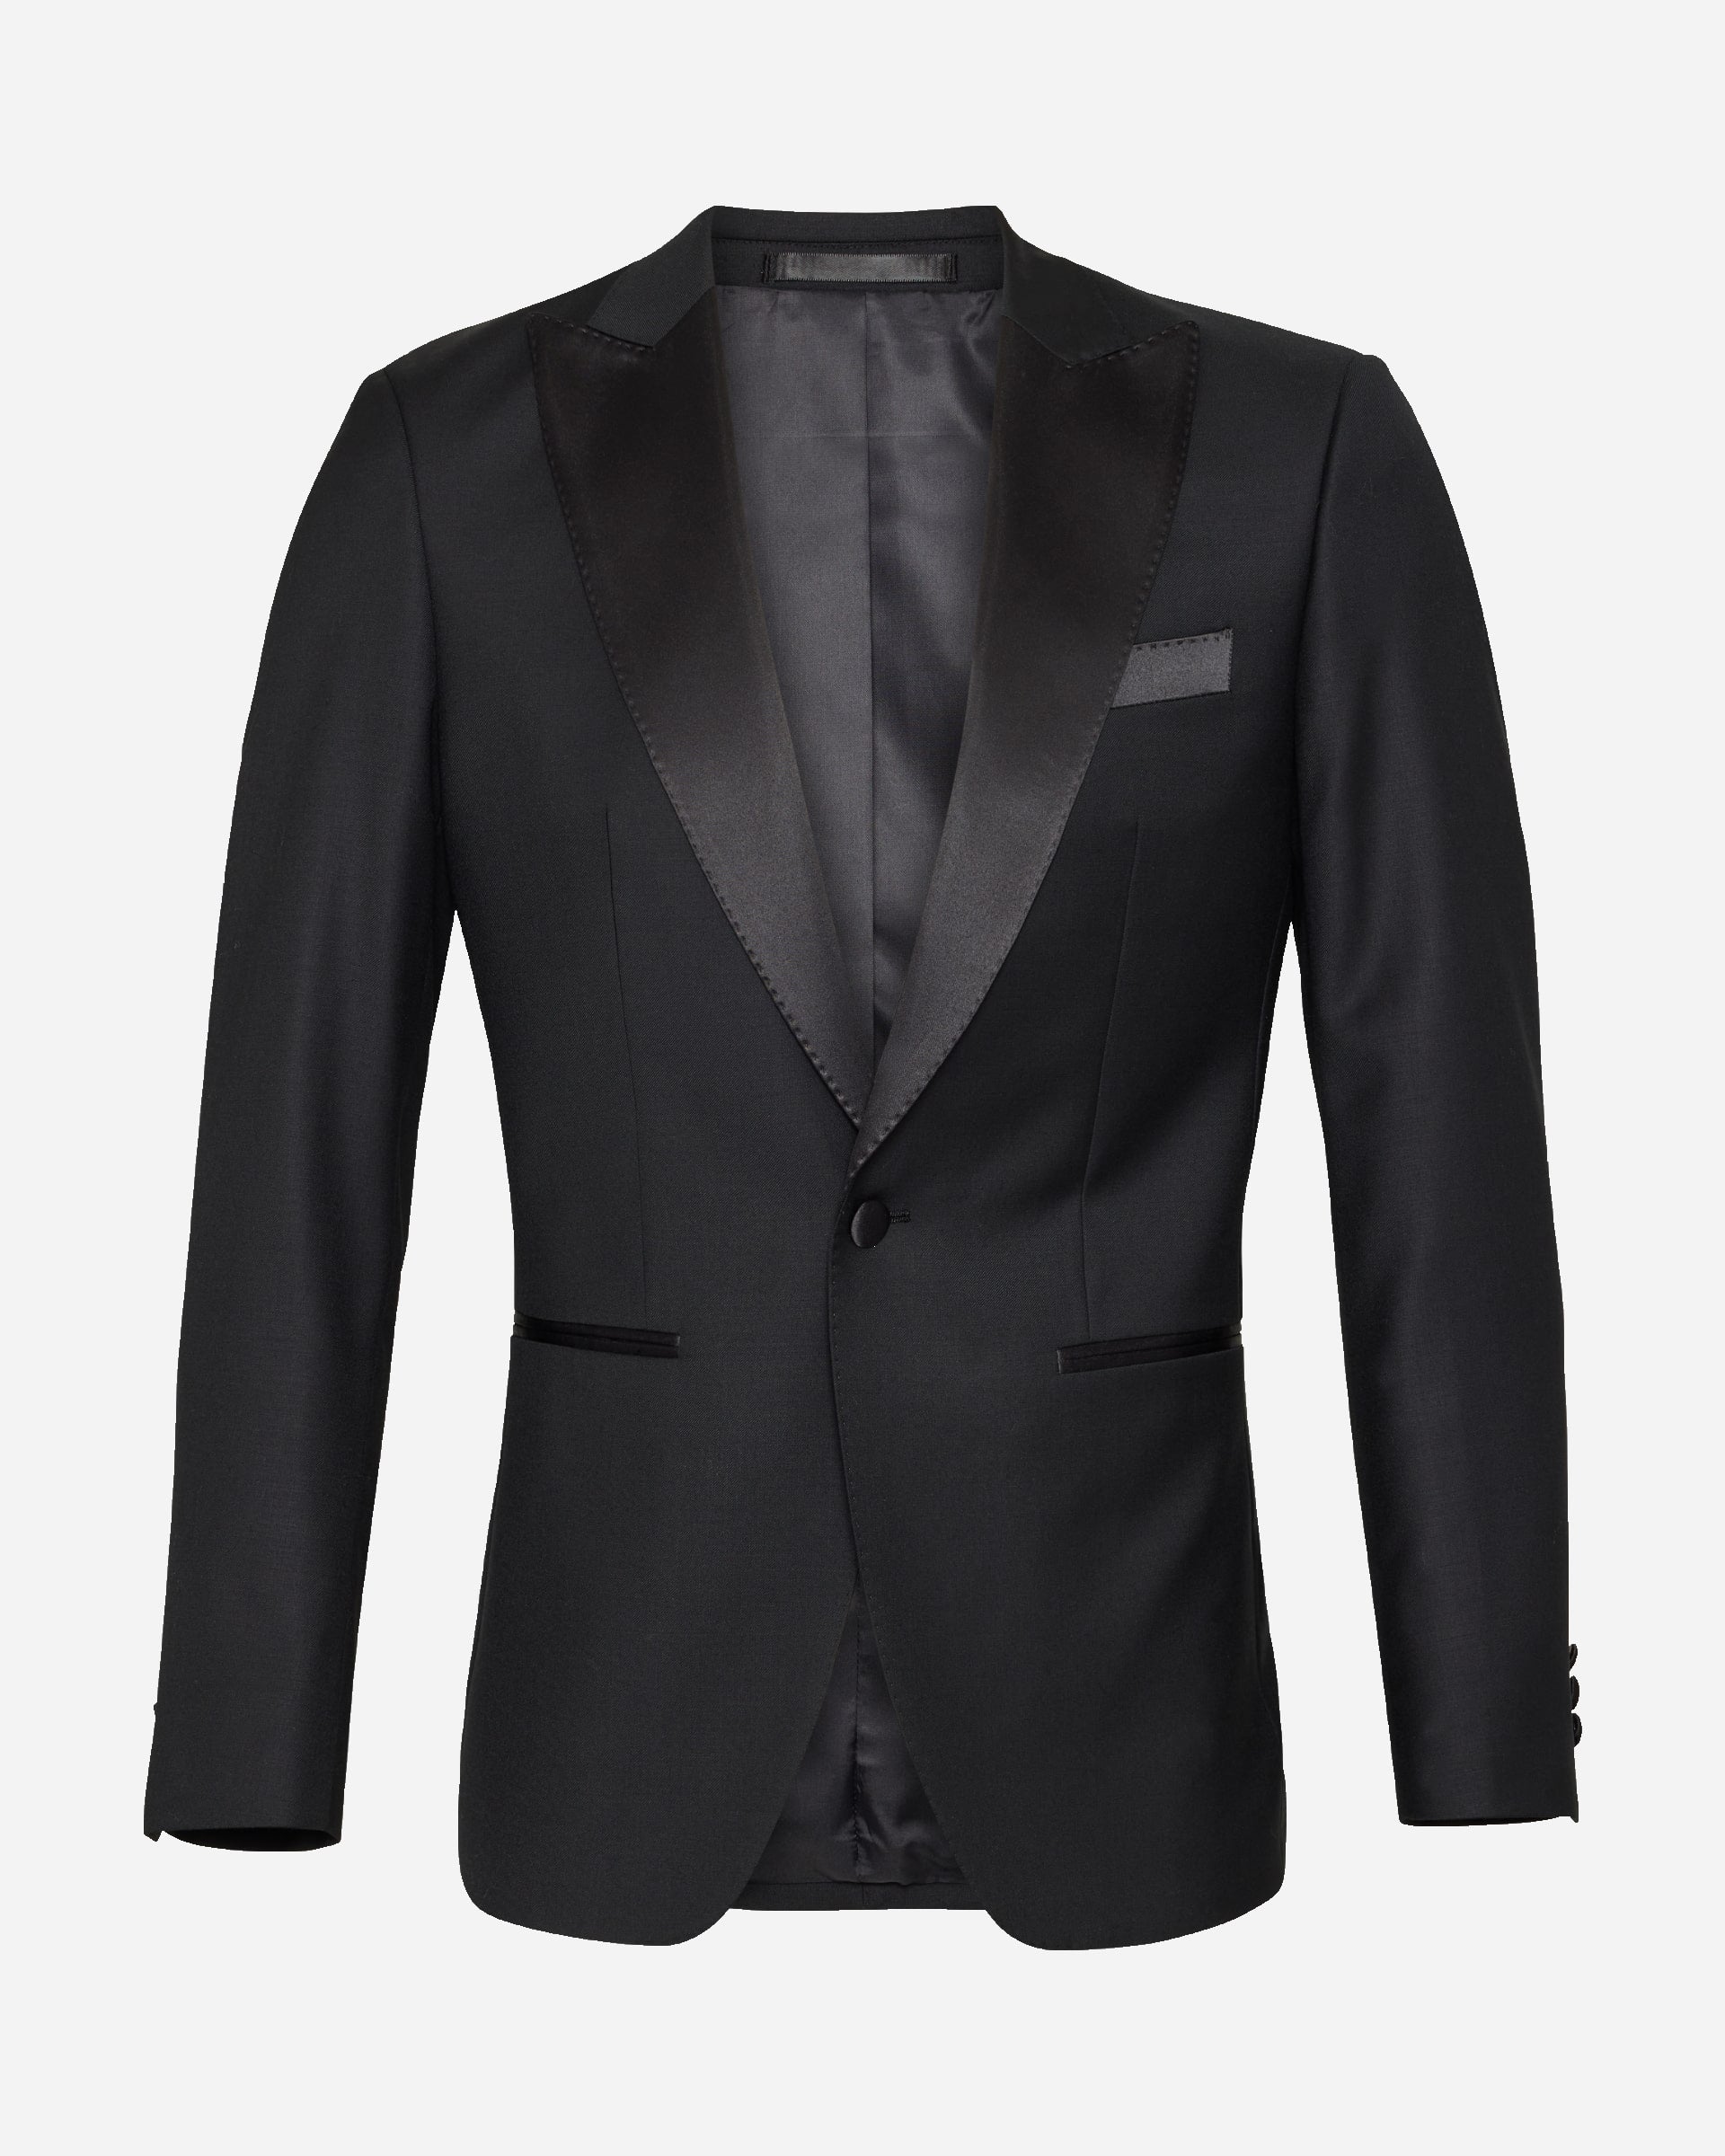 Perez Black Dinner Jacket - Men's Suits & Tuxedos at Menzclub